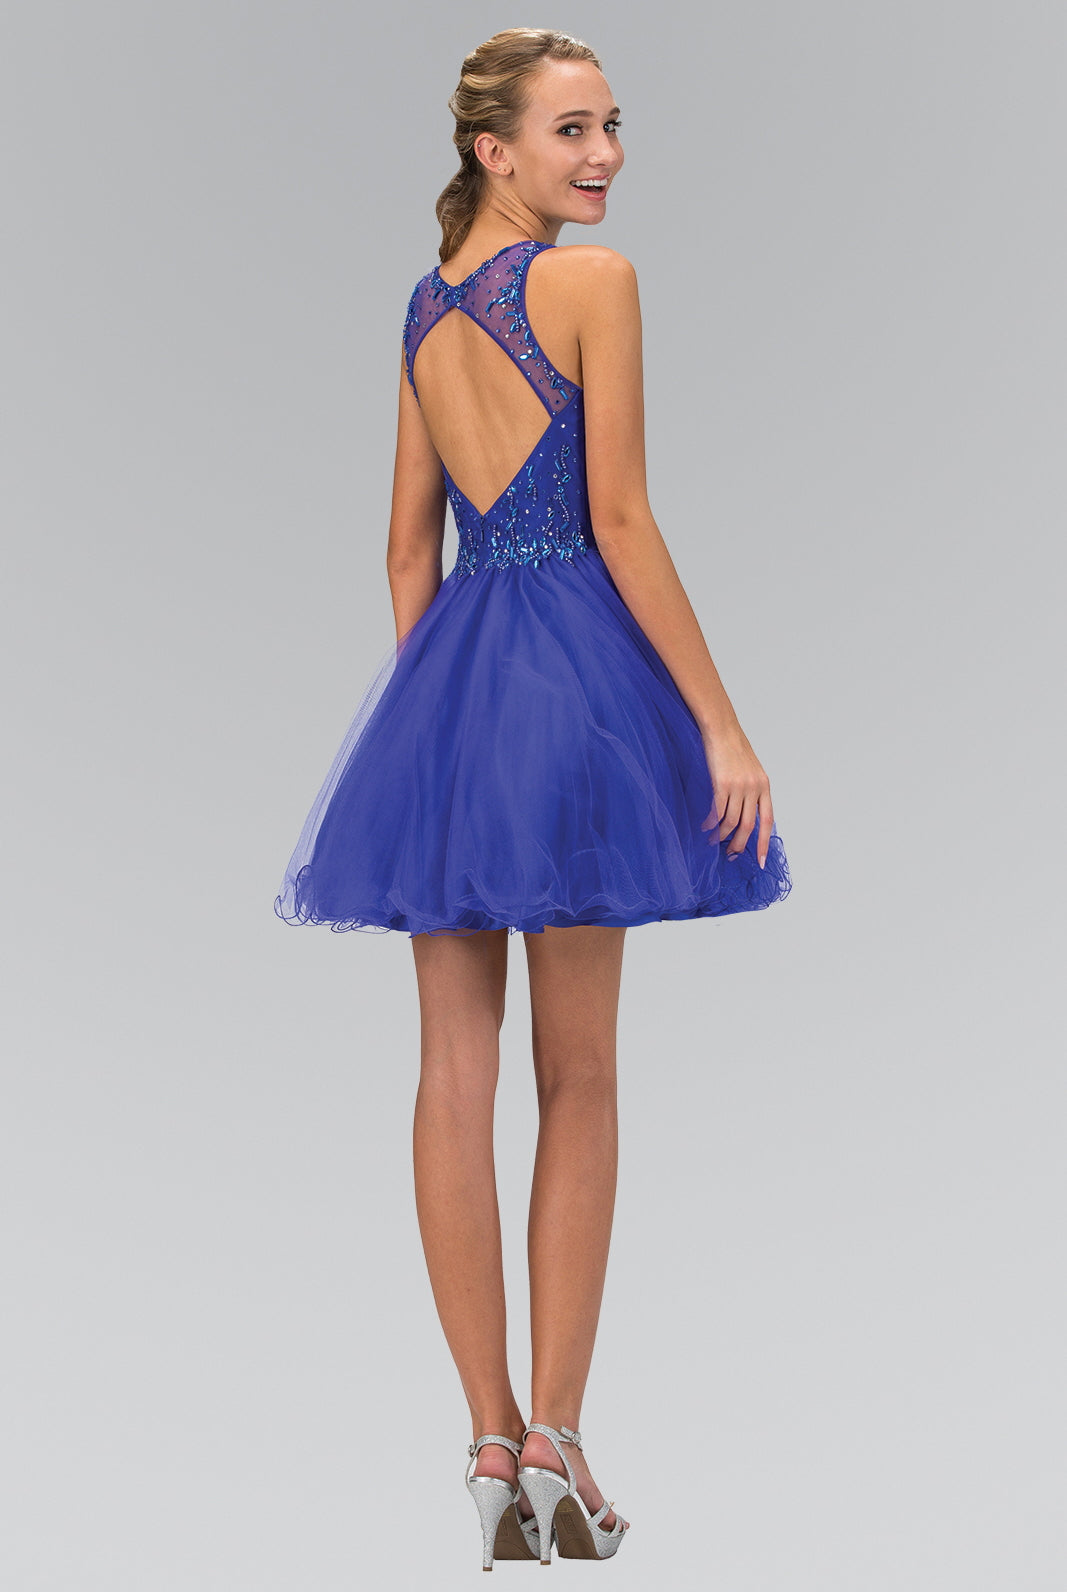 Jewel Embellished Tulle Short Dress with Sheer Illusion Neckline-smcdress